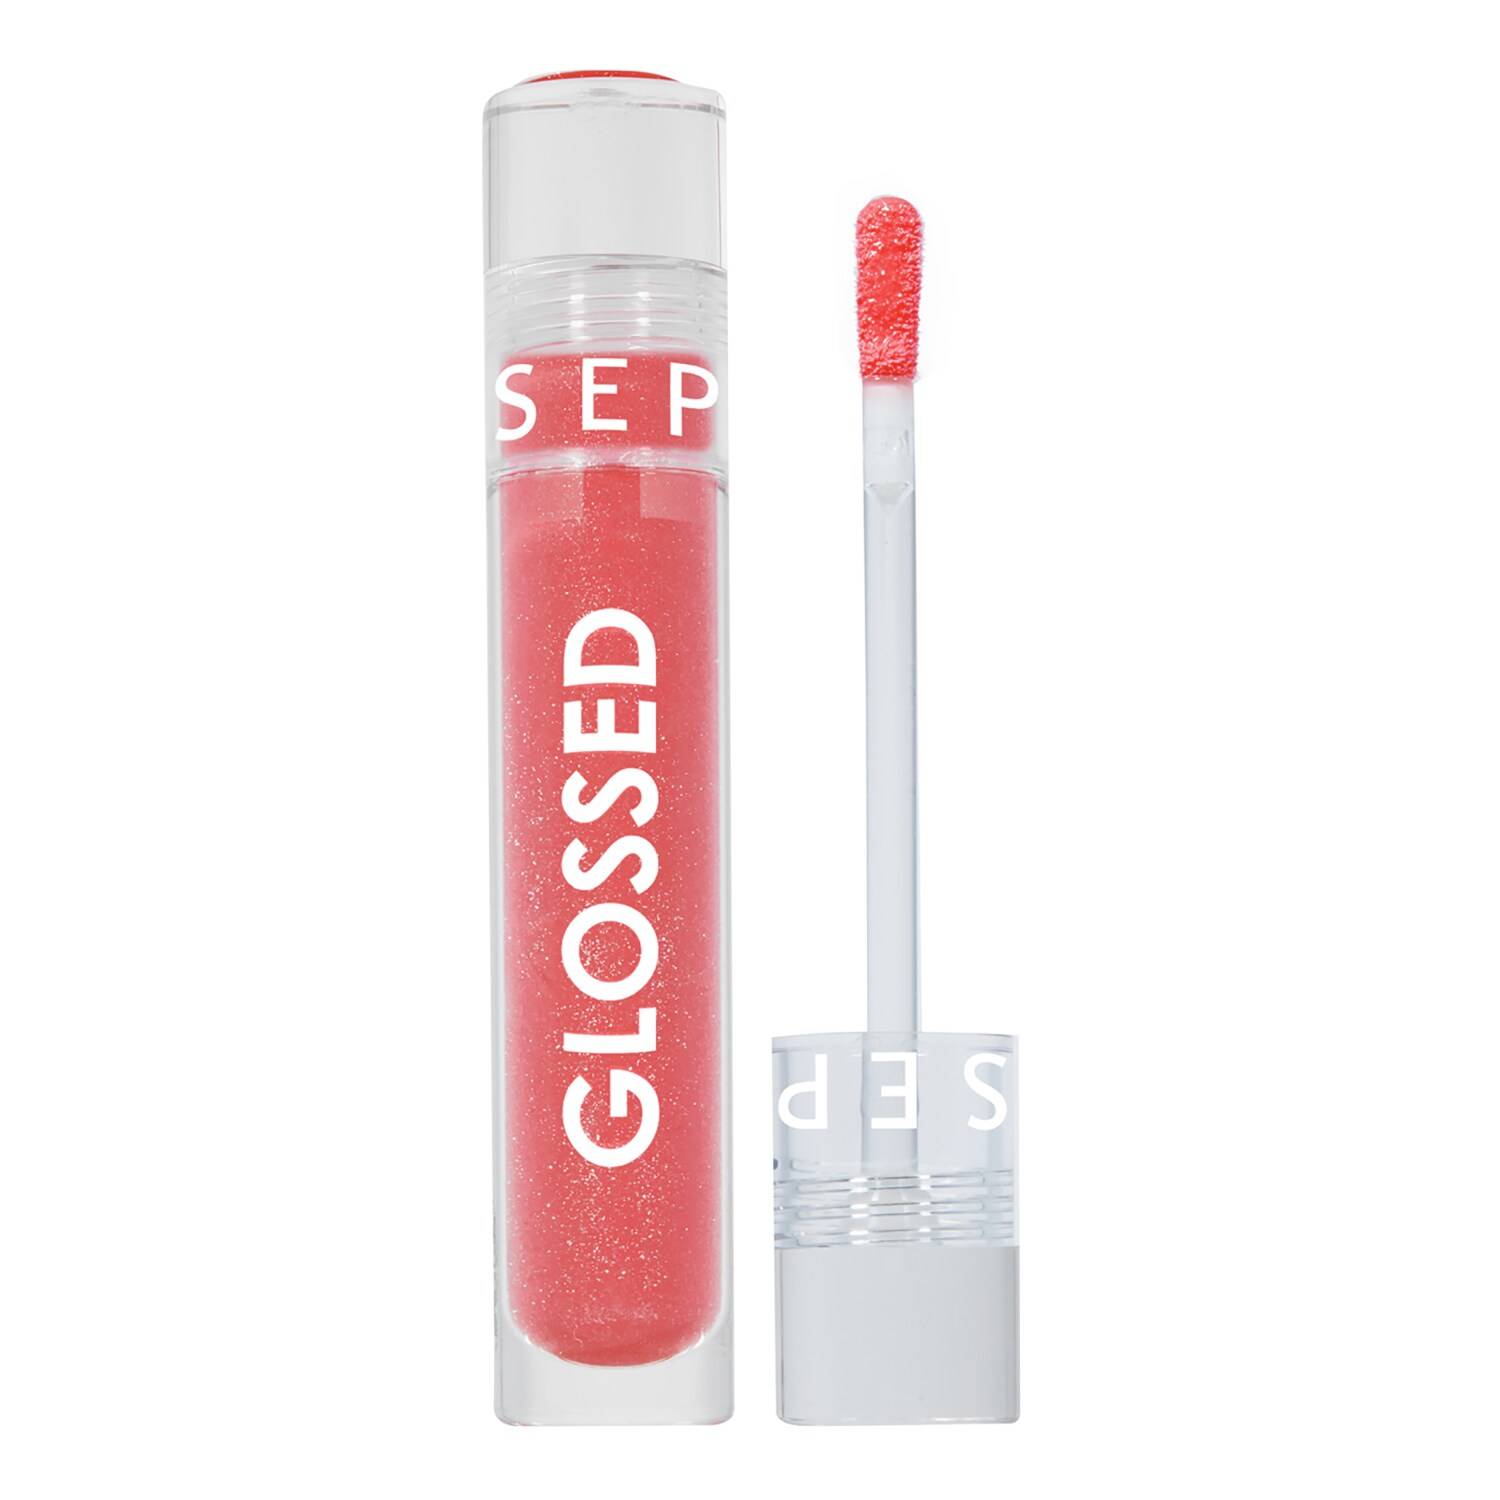 Sephora Collection Glossed Lip Gloss 5Ml 45. Chic - Glitter Finish